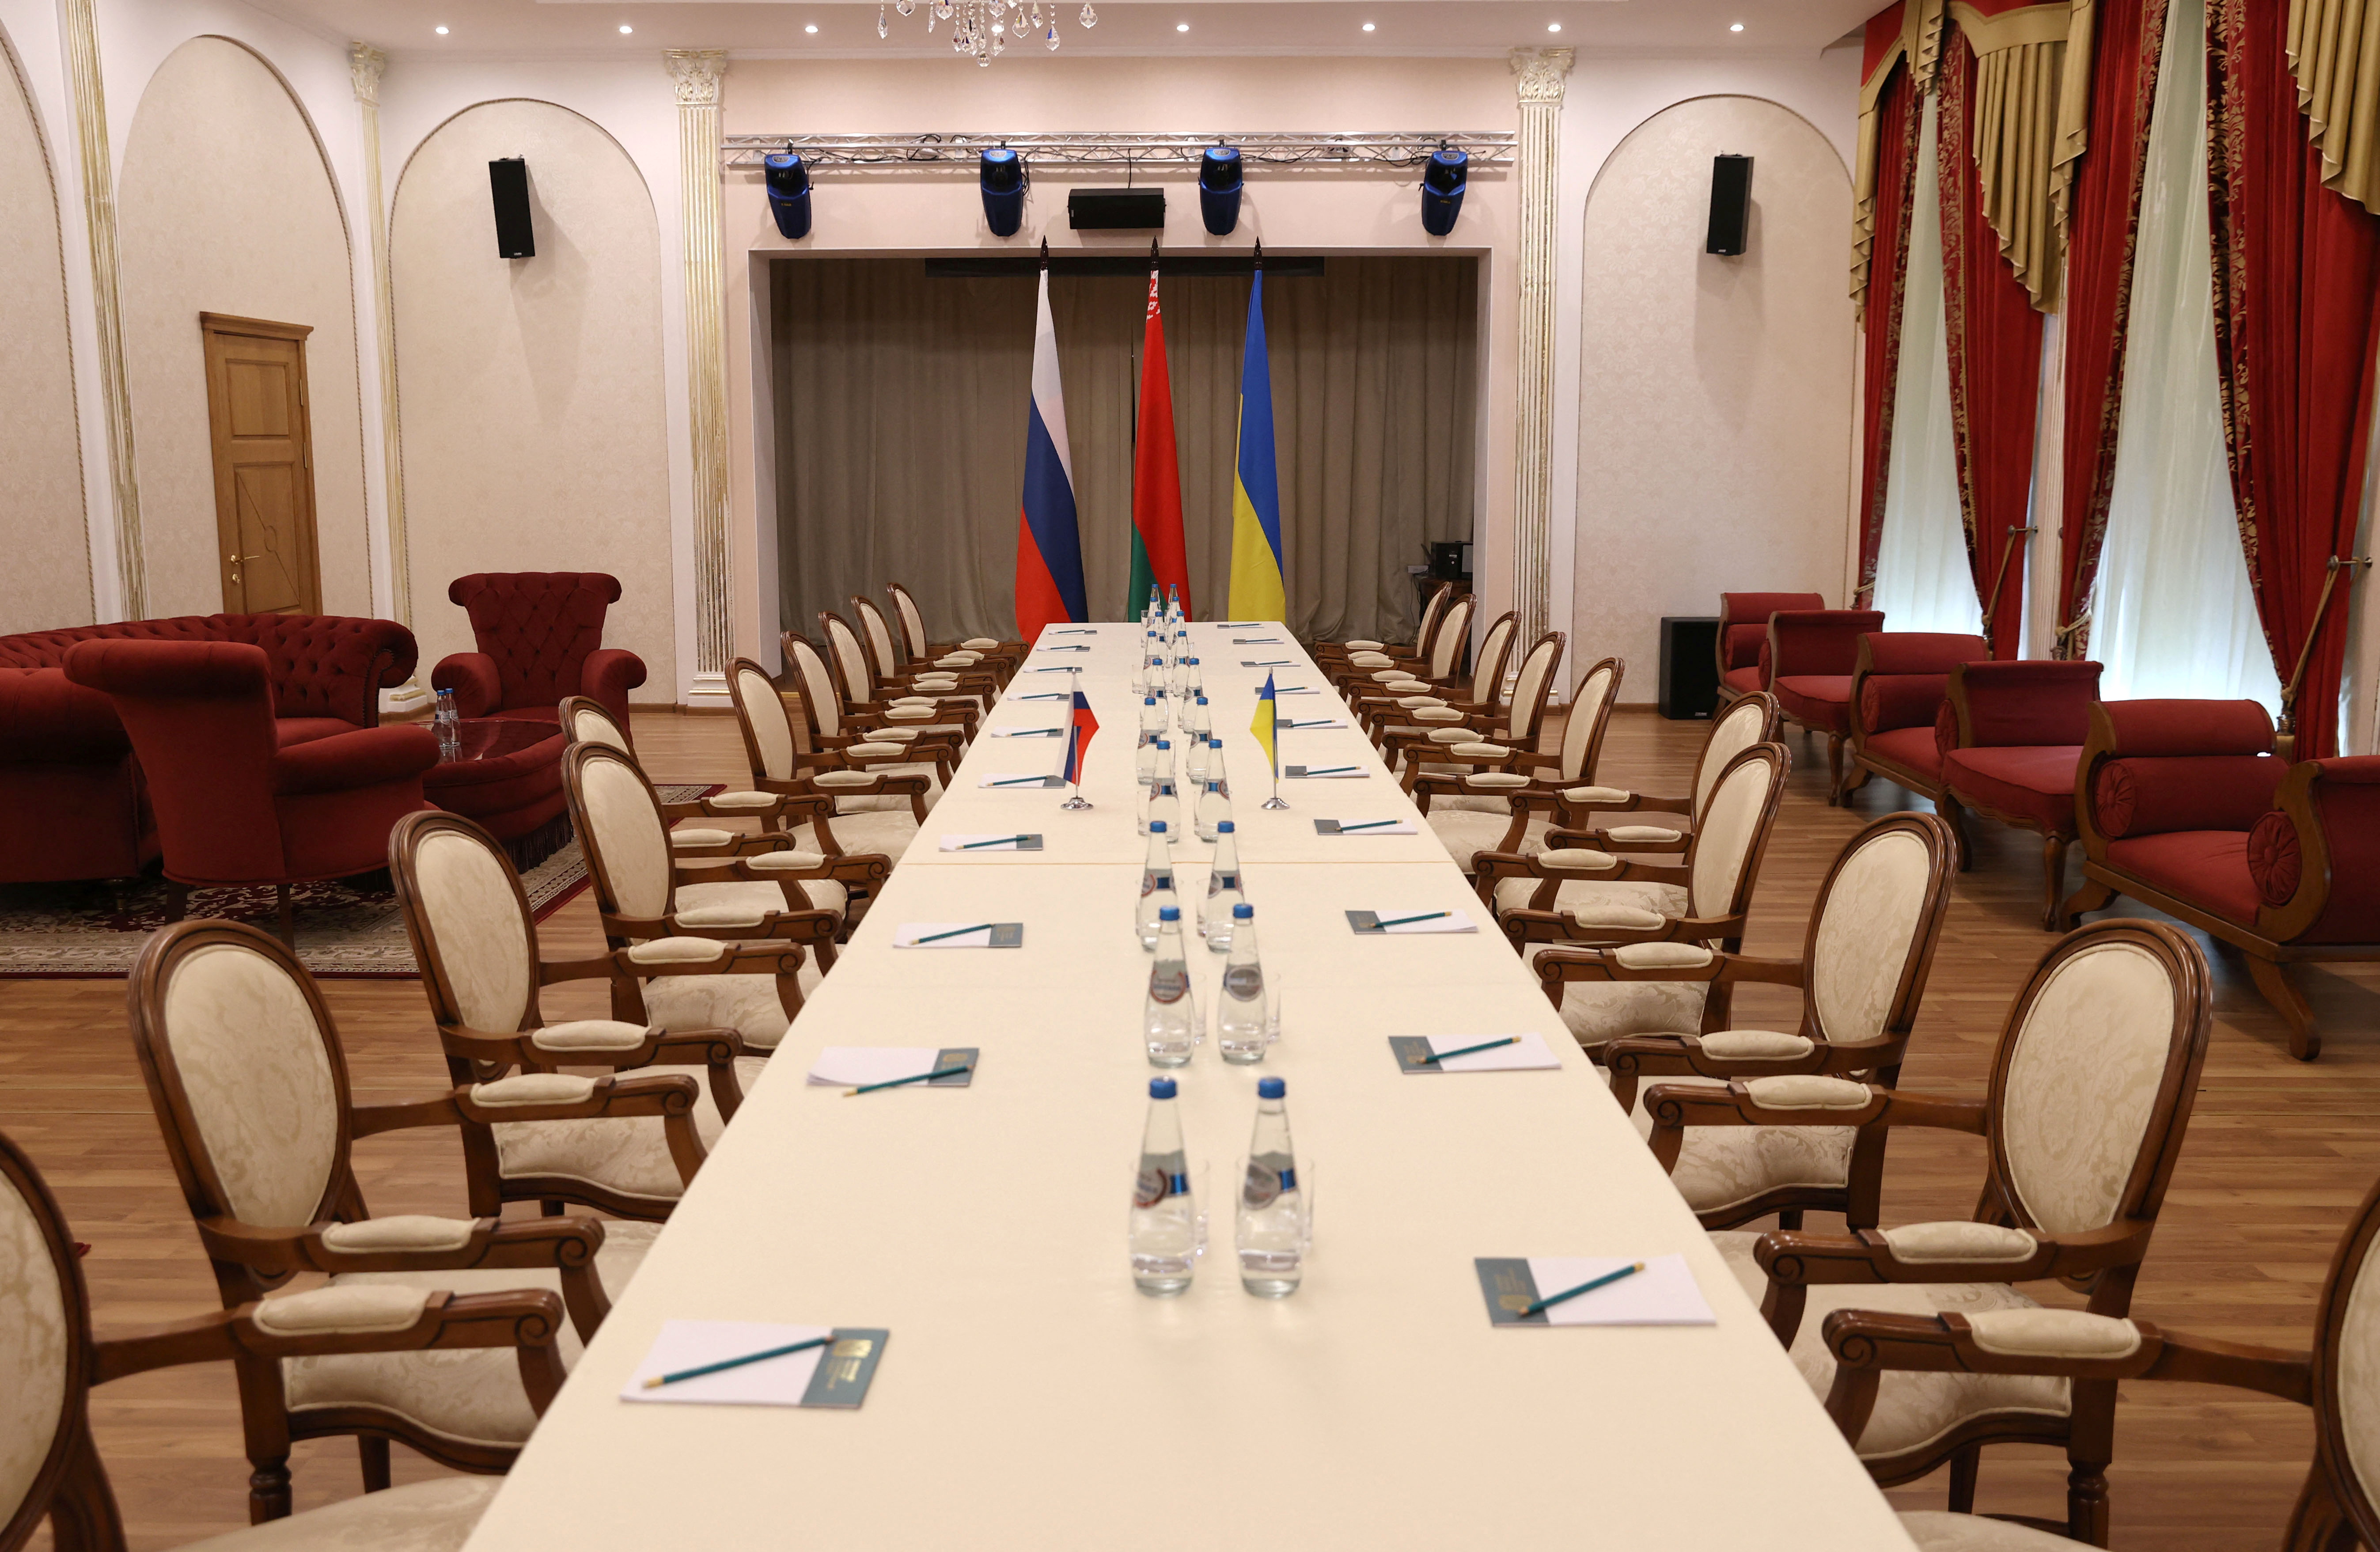 The venue of the forthcoming talks between Russian and Ukrainian delegations is seen, in Rumyantsev-Paskevich Residence in Gomel, Belarus February 28, 2022.  Sergei Kholodilin/BelTA/Handout via REUTERS 